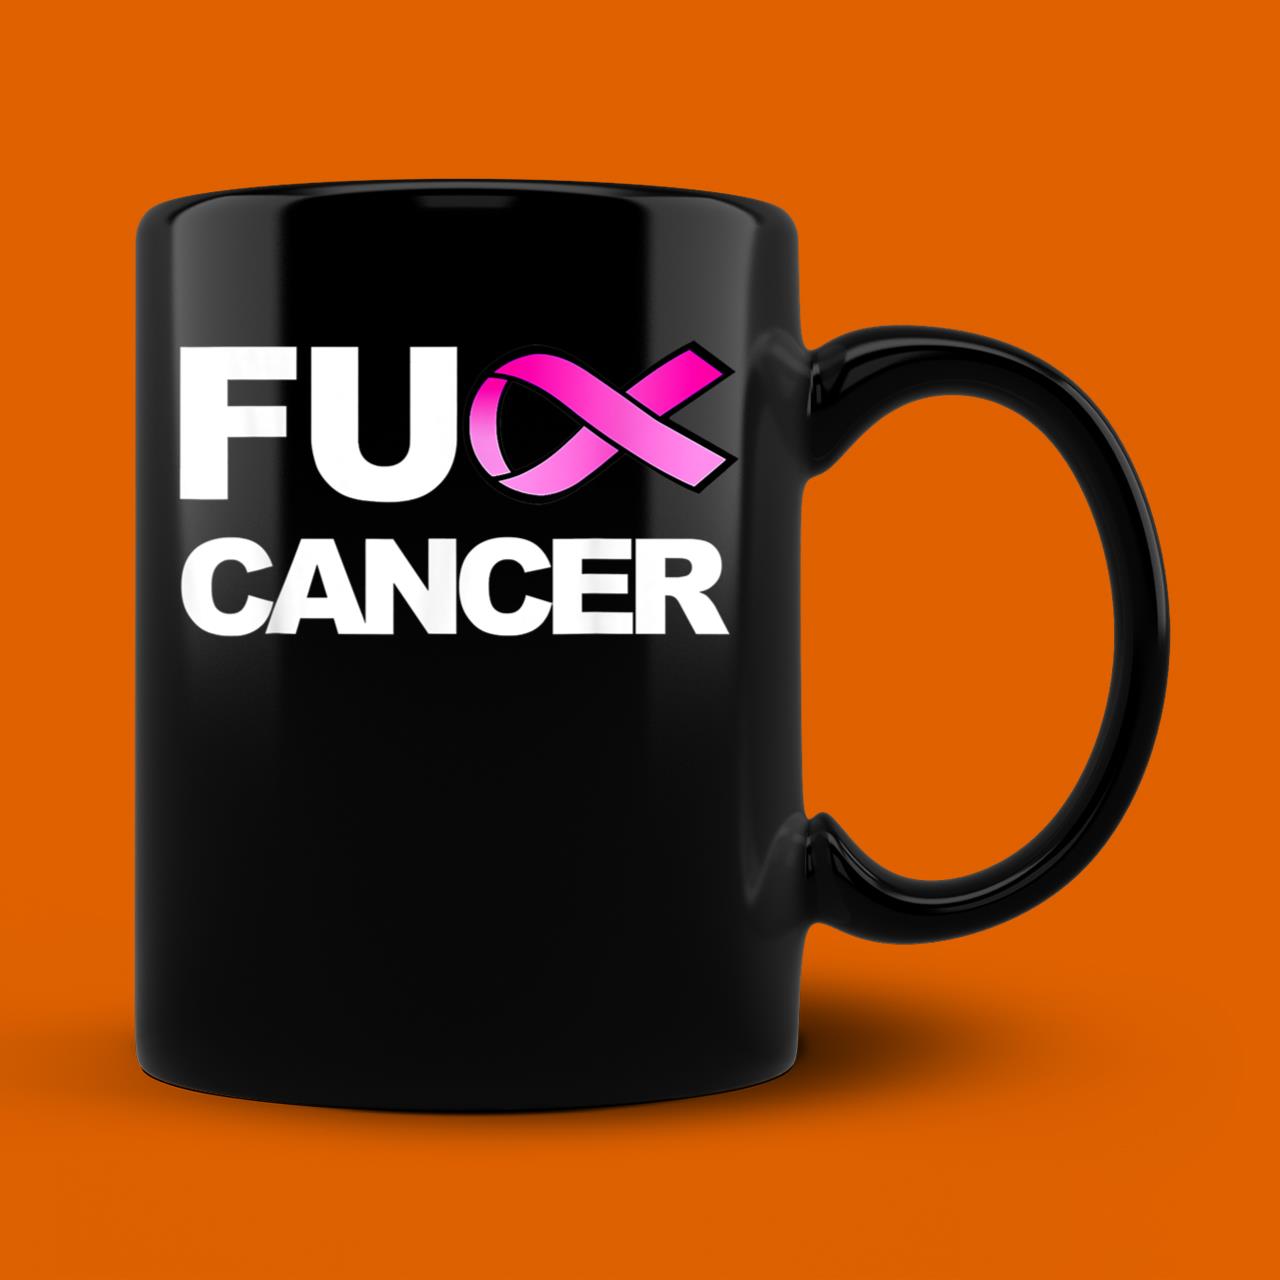 Fuck Breast Cancer Awareness T-Shirt